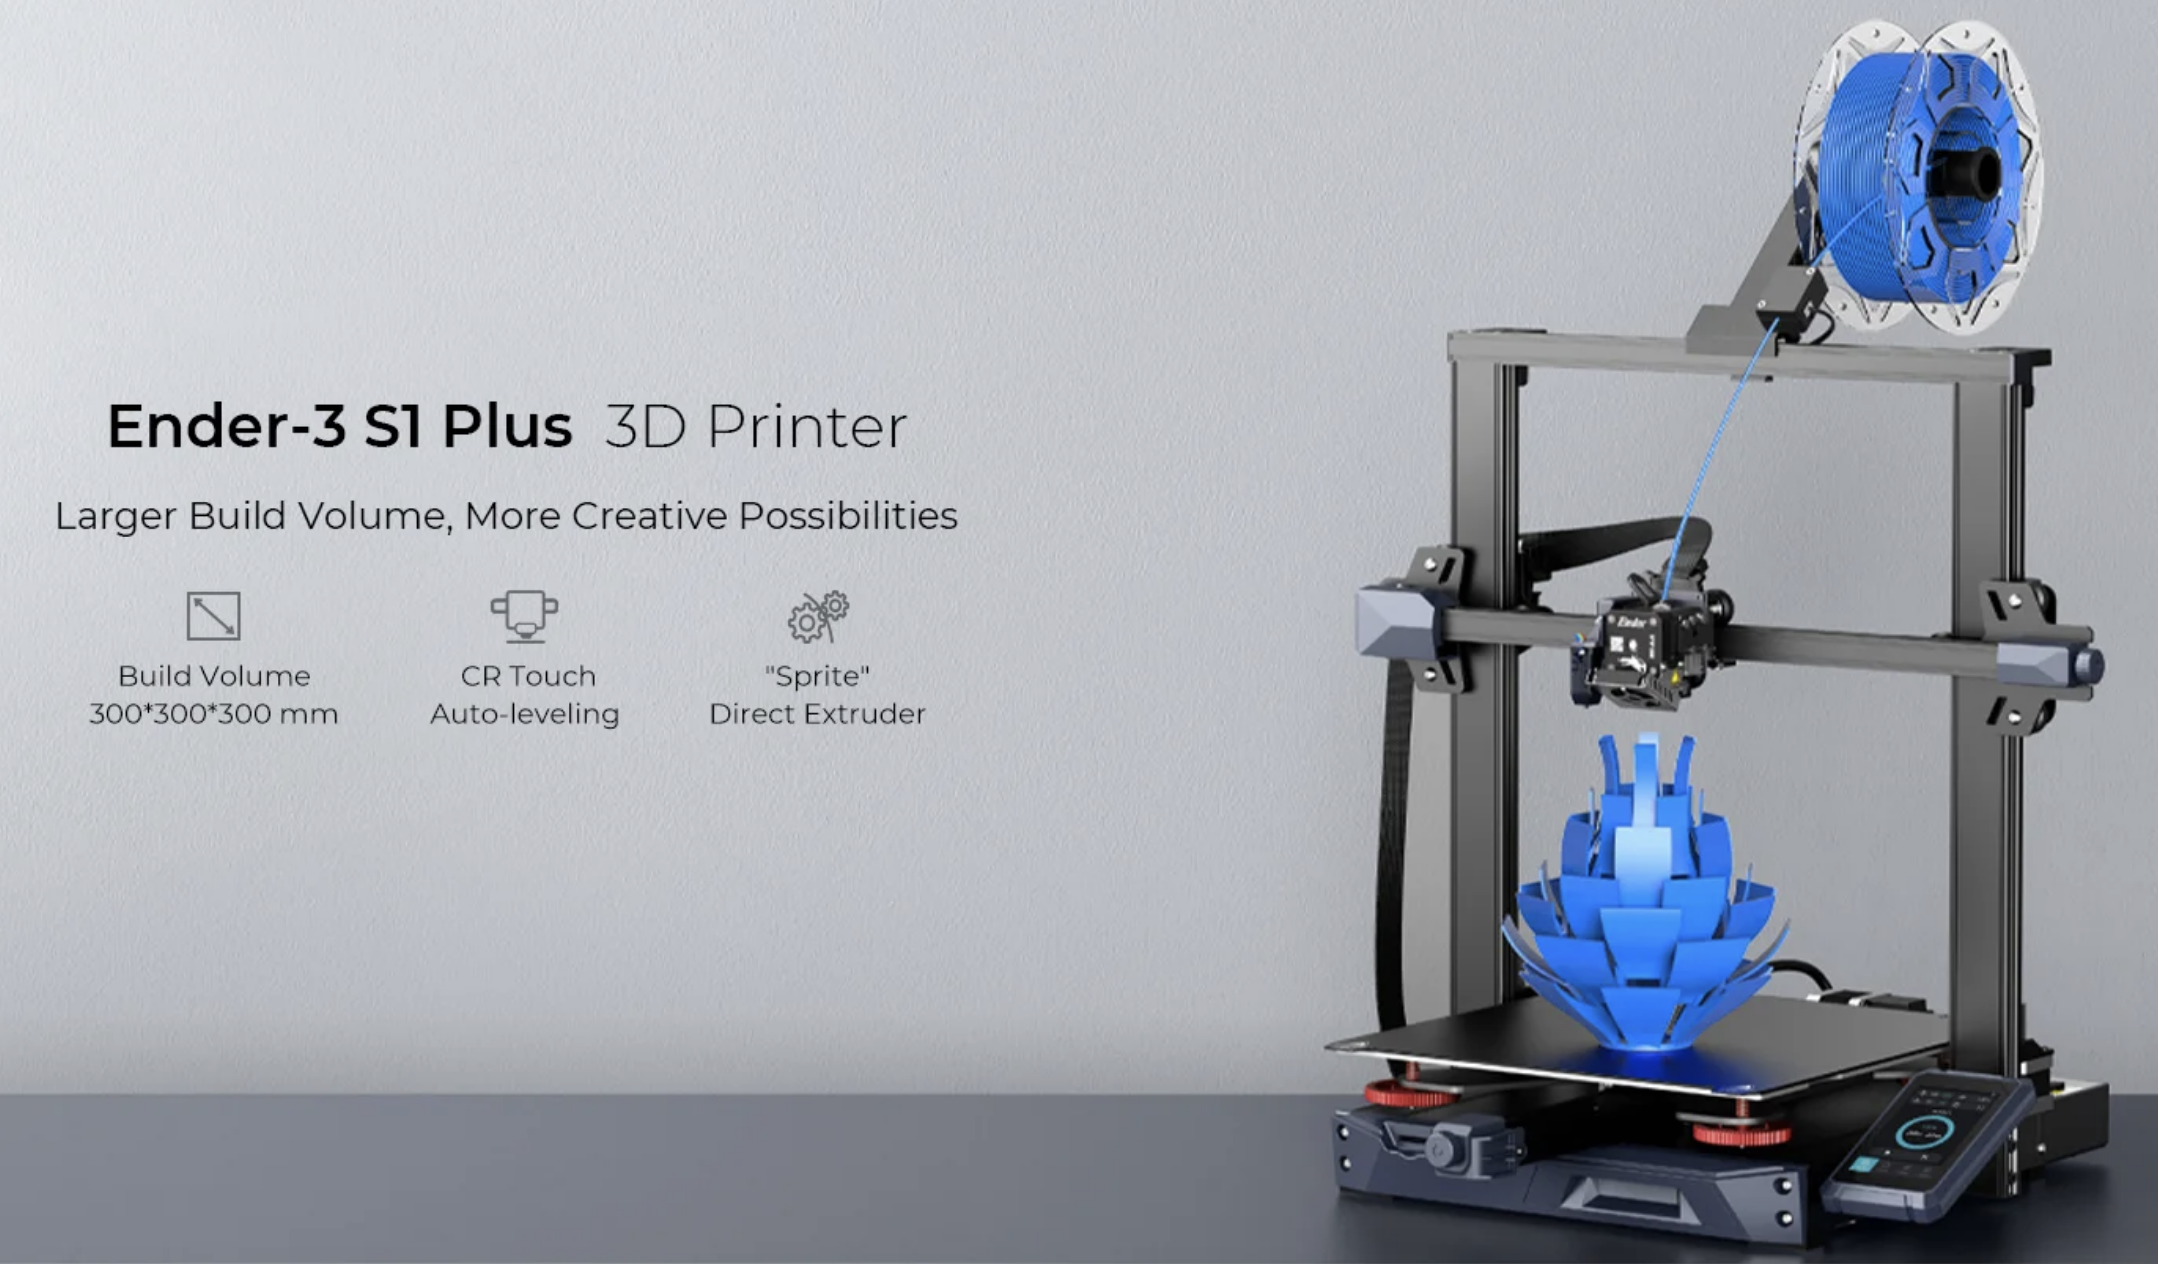 CREALITY ENDER-3 S1 PLUS 3D Printer
엔더-3 S1 플러스
듀얼 Z축, 300 x 300 x 300 빌드볼륨, 4.3인치 터치스크린